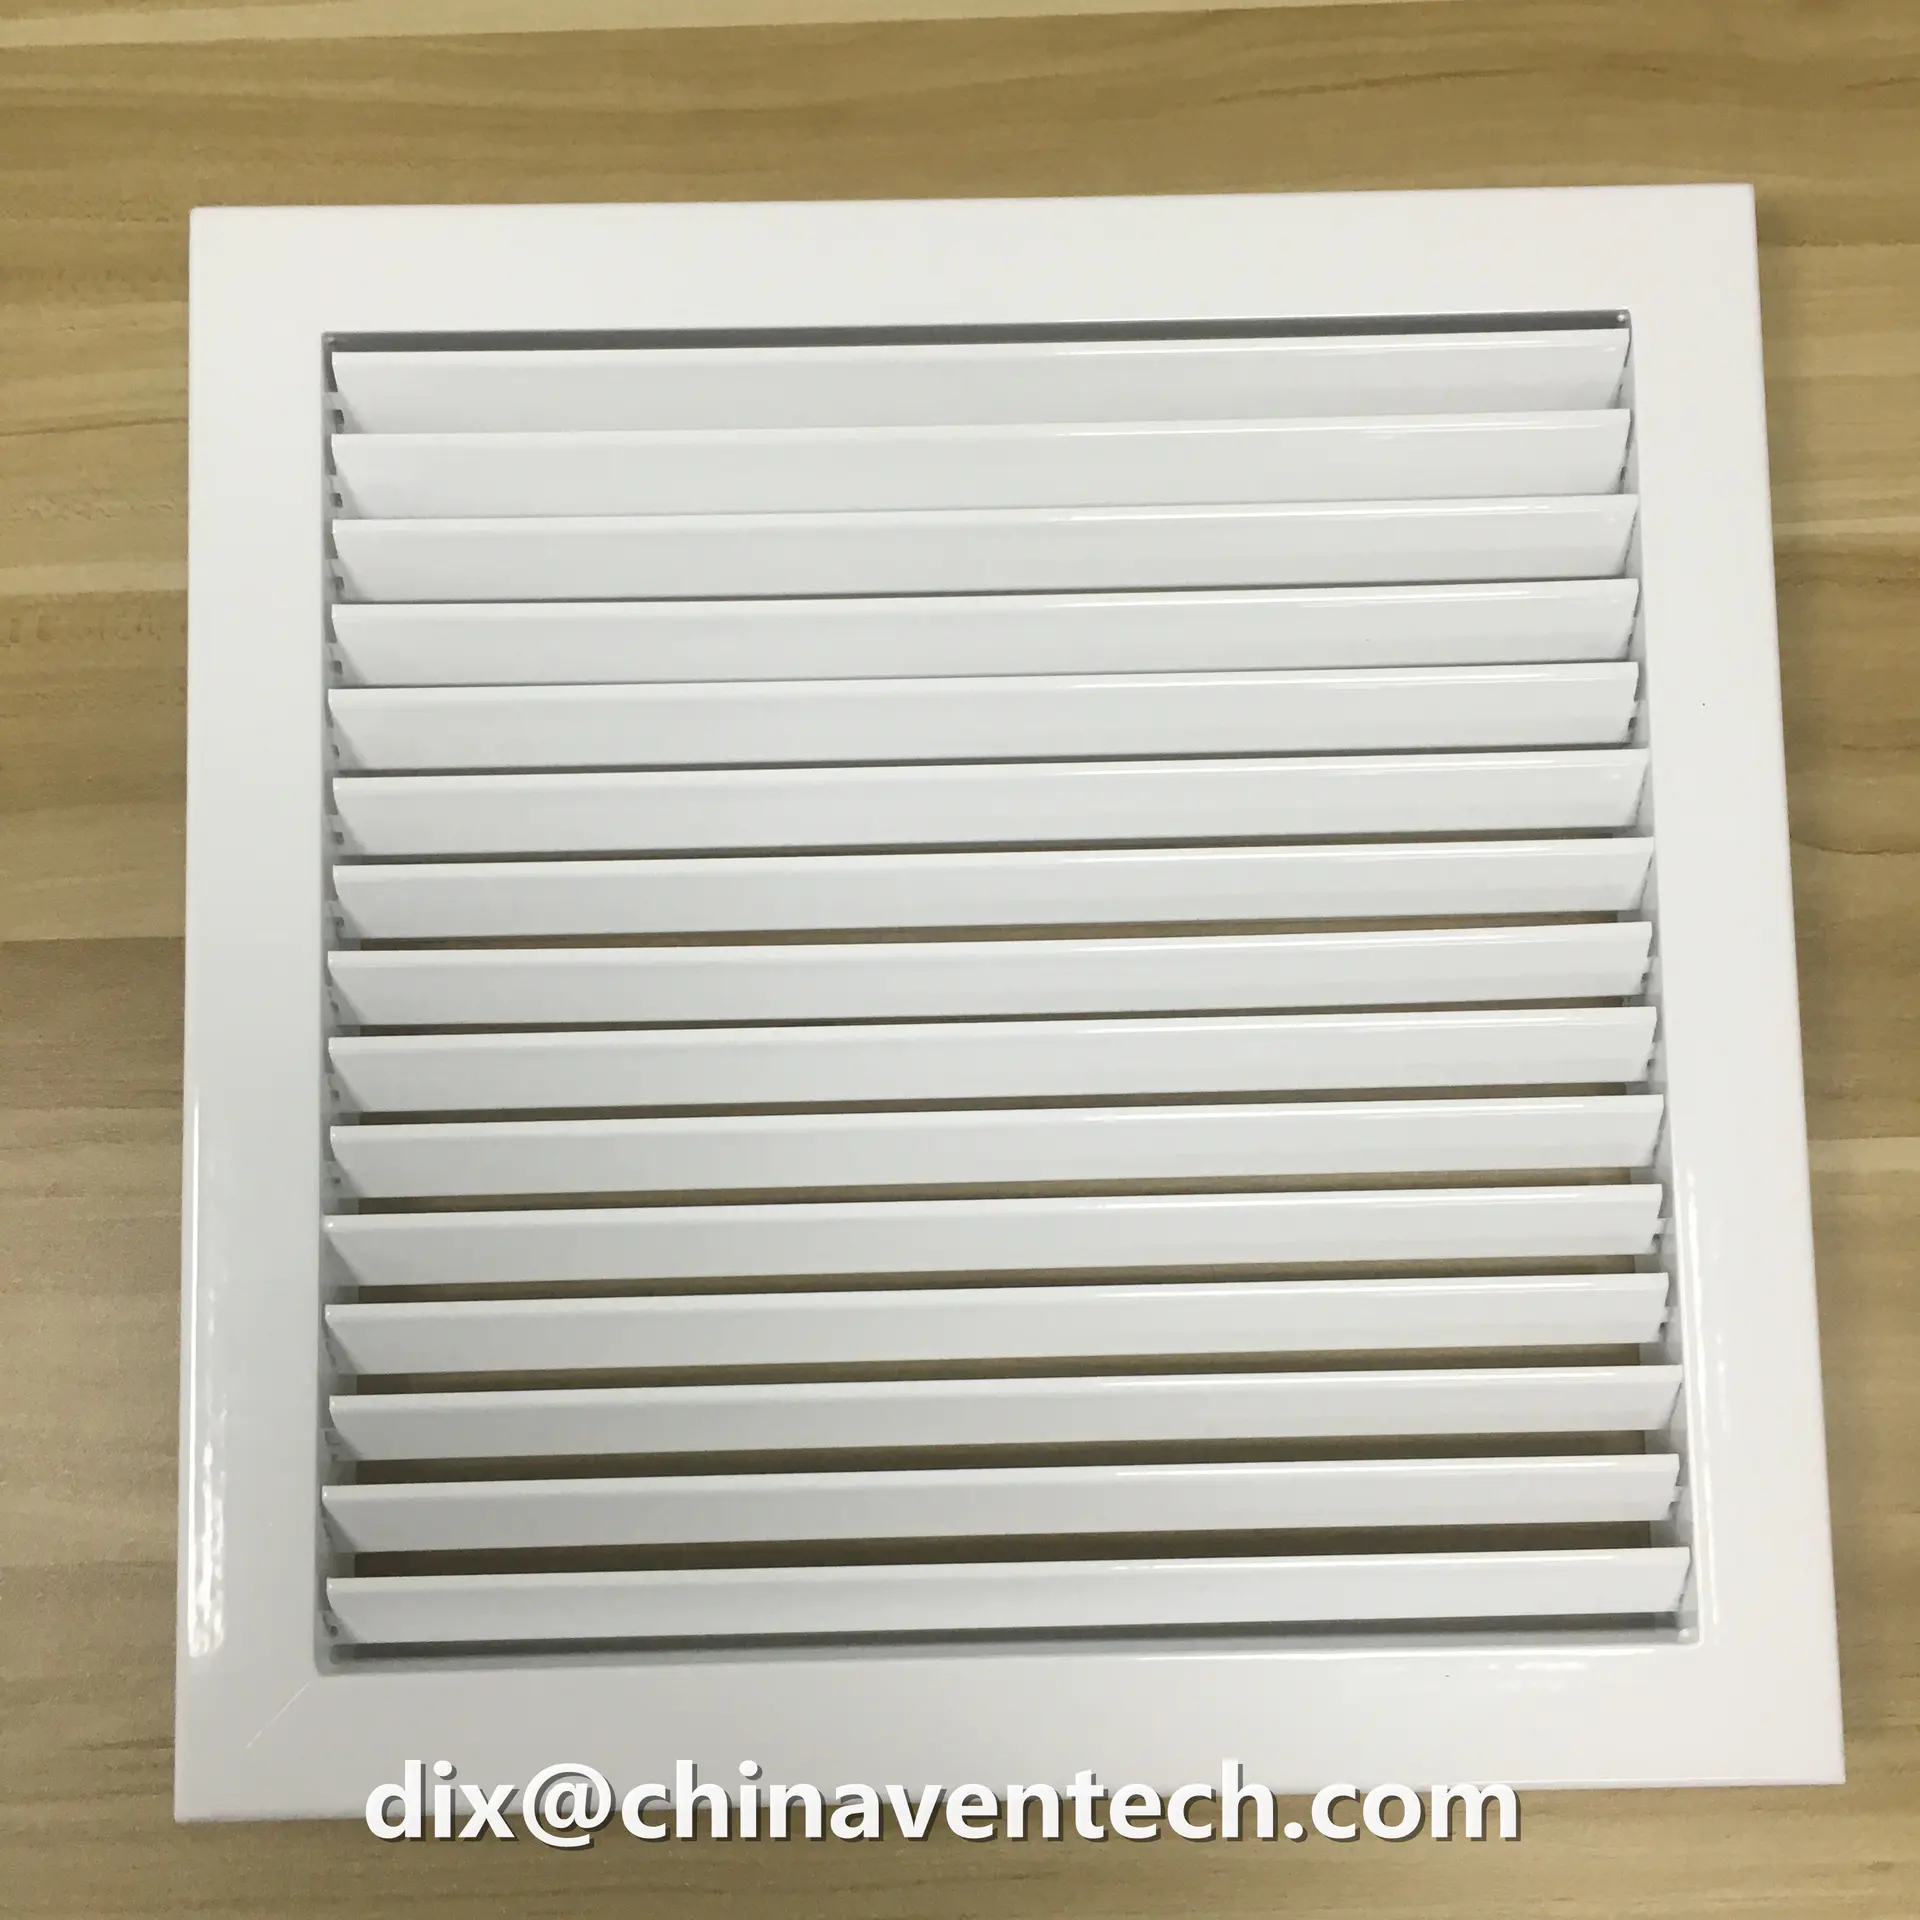 HVAC toilet wall ventilation ceiling exhaust air return grille register